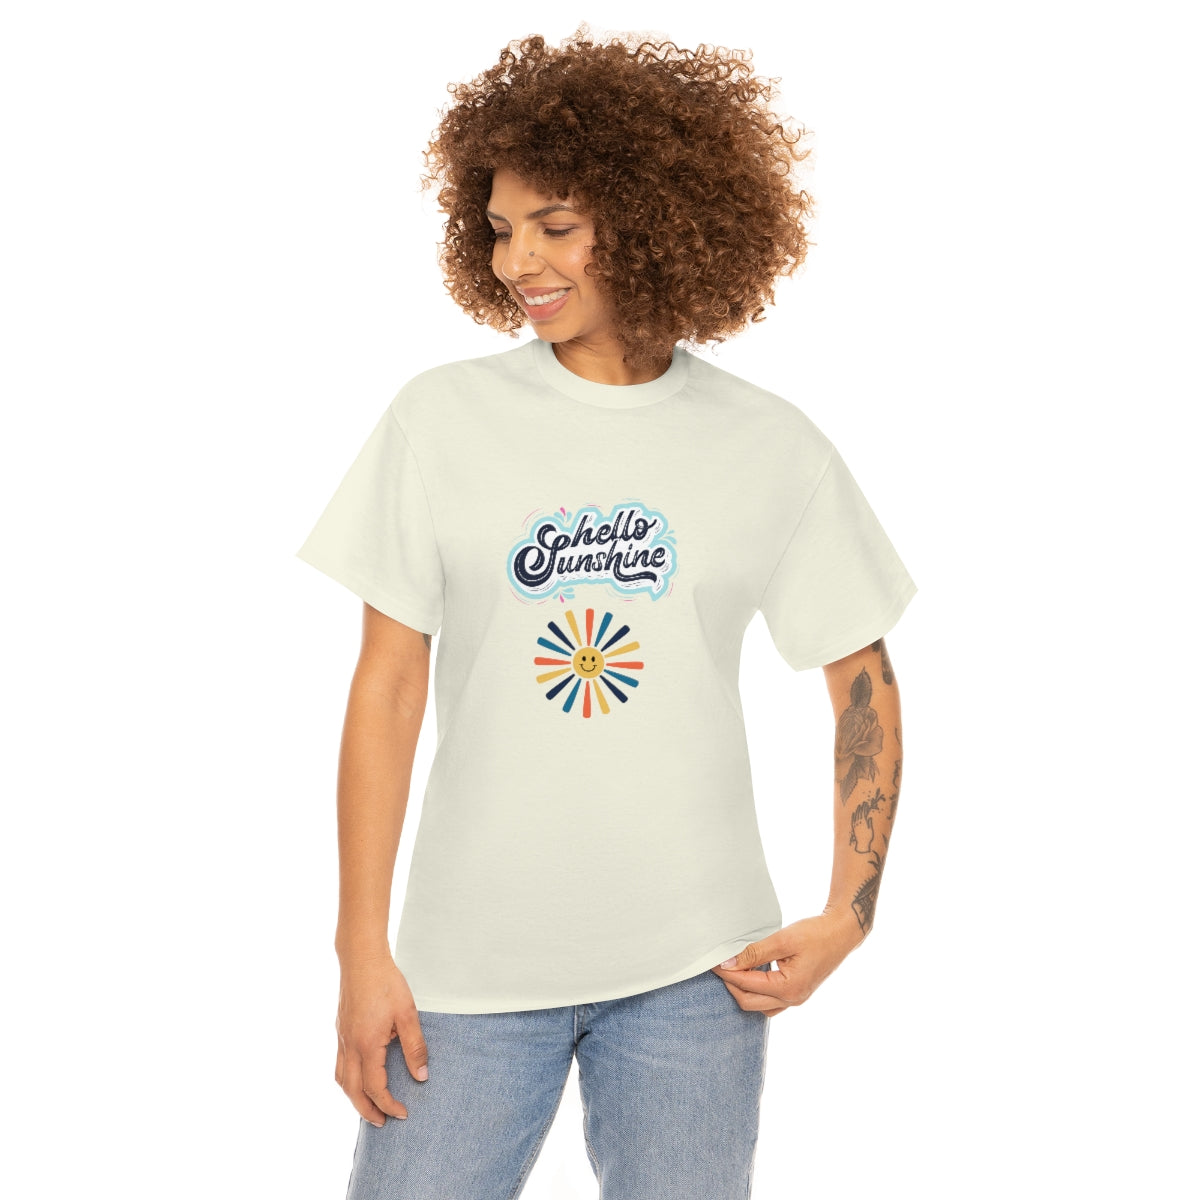 Hello Sunshine Tee, Retro Sunshine Tee, Vintage Graphic T-Shirt, Retro Sun Tshirt, Summer Shirt, Boho Shirt, Sunshine, Camping Shirt - The Good Life Vibe